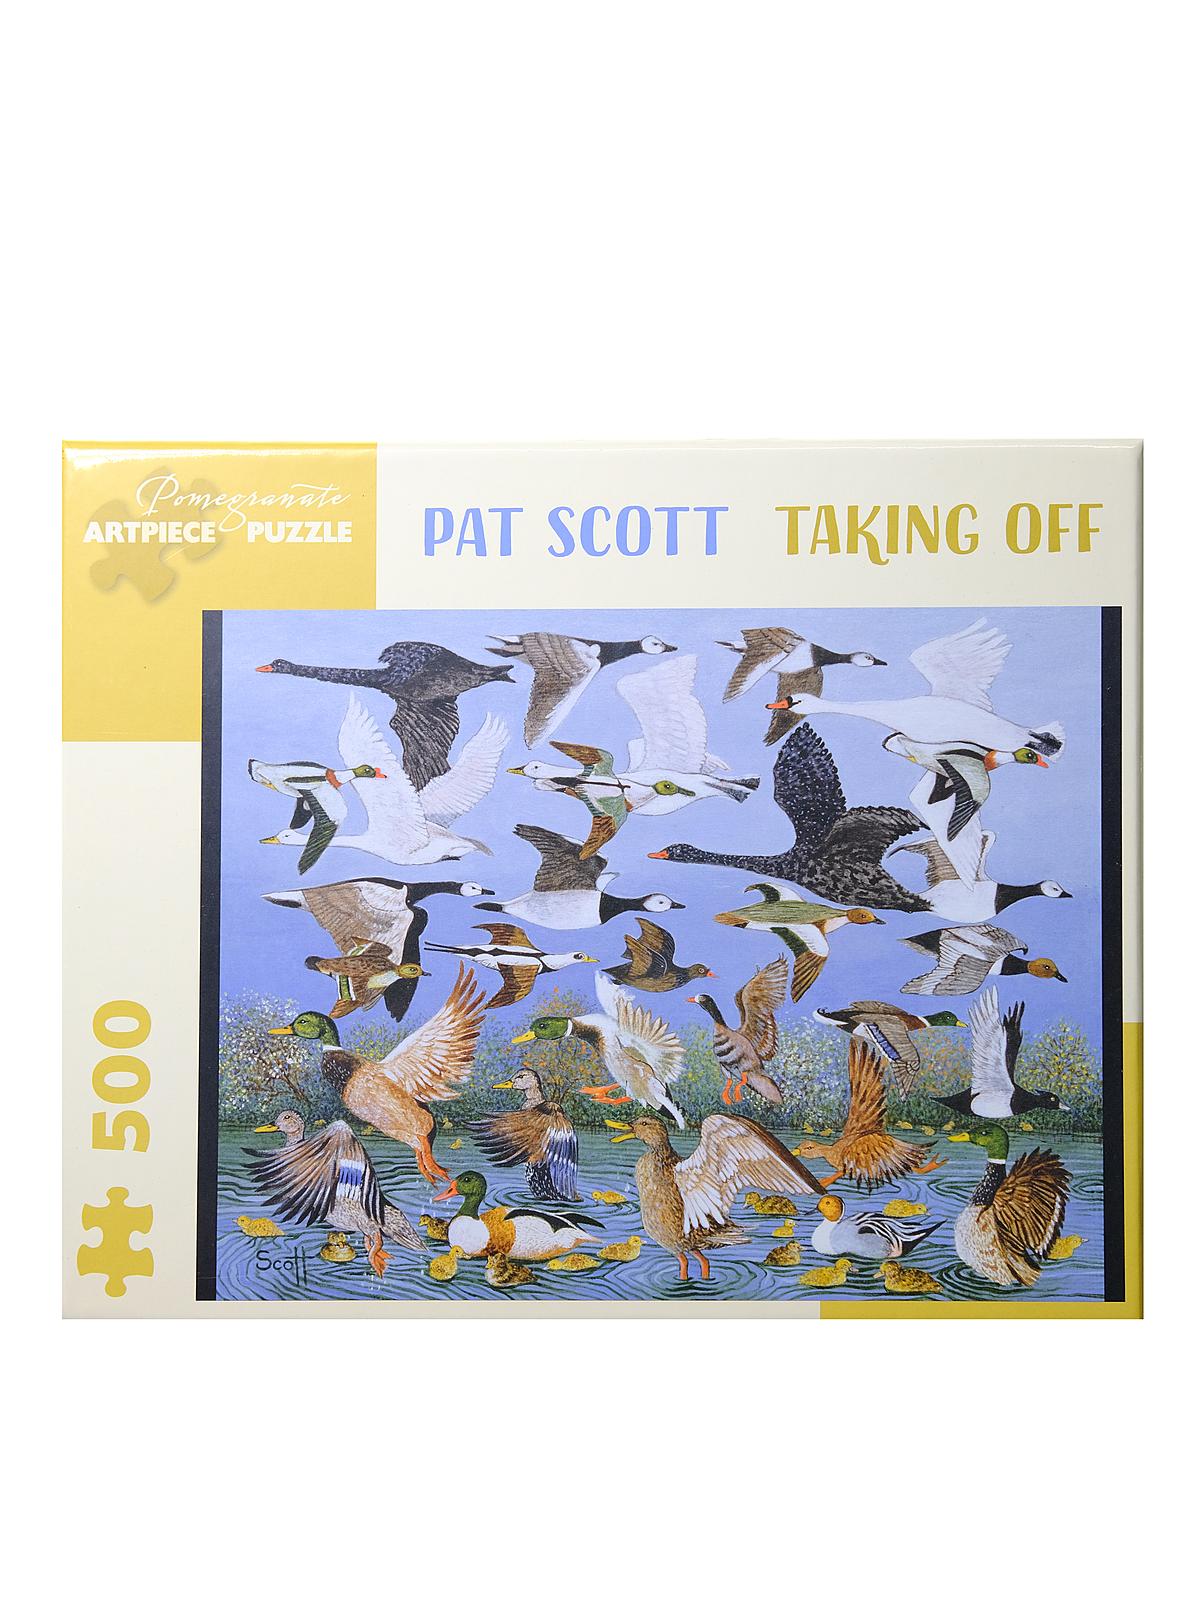 Pat Scott: Taking Off